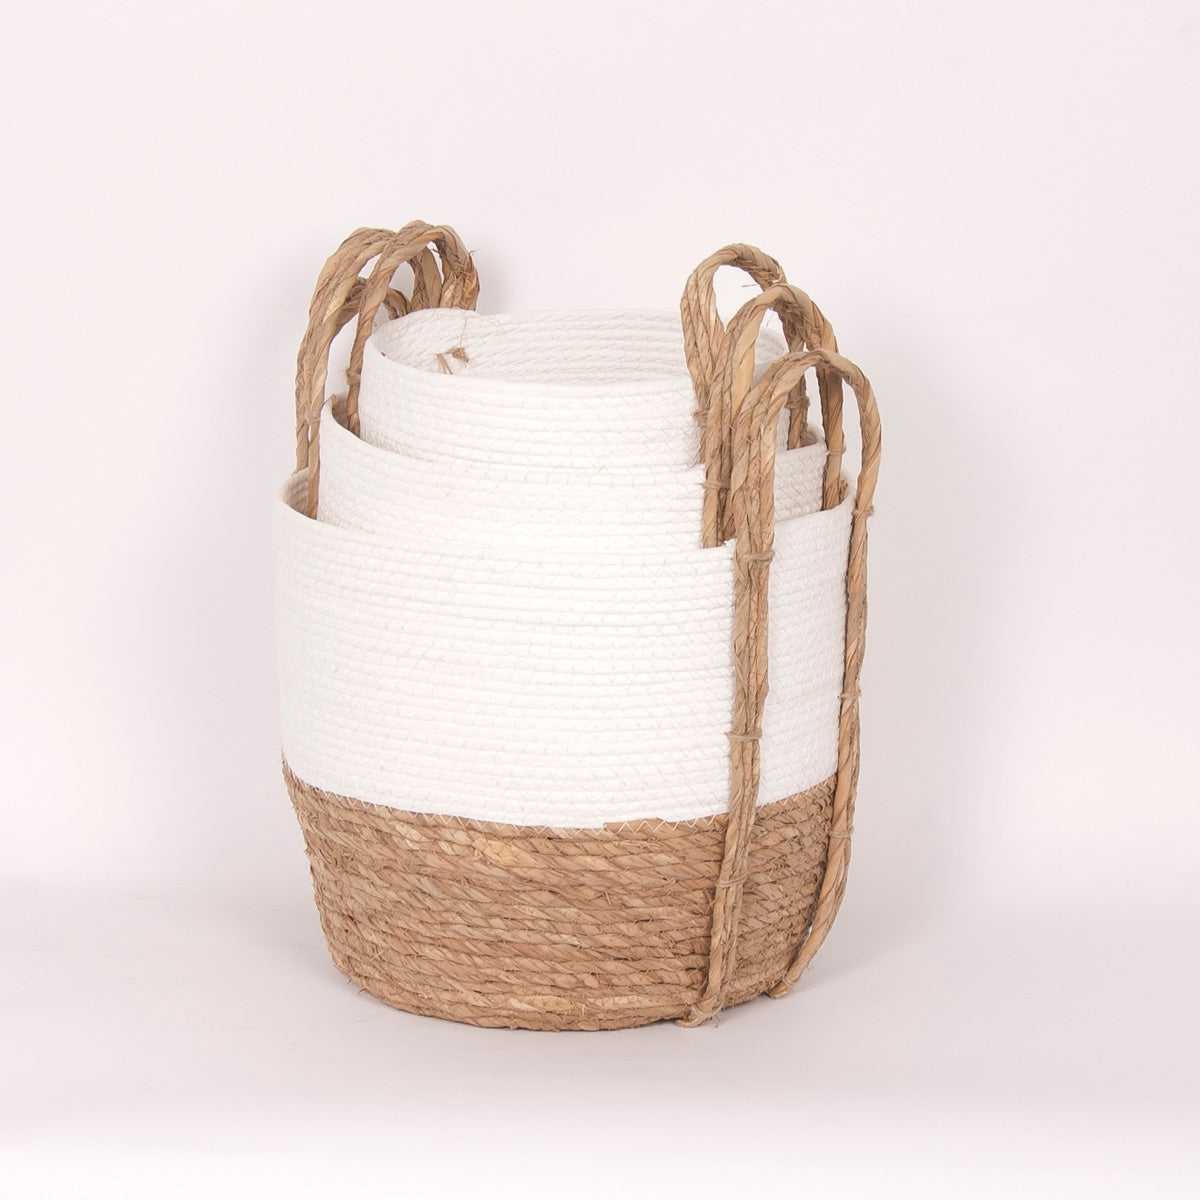 Set of 3 White/ Natural Straw Baskets